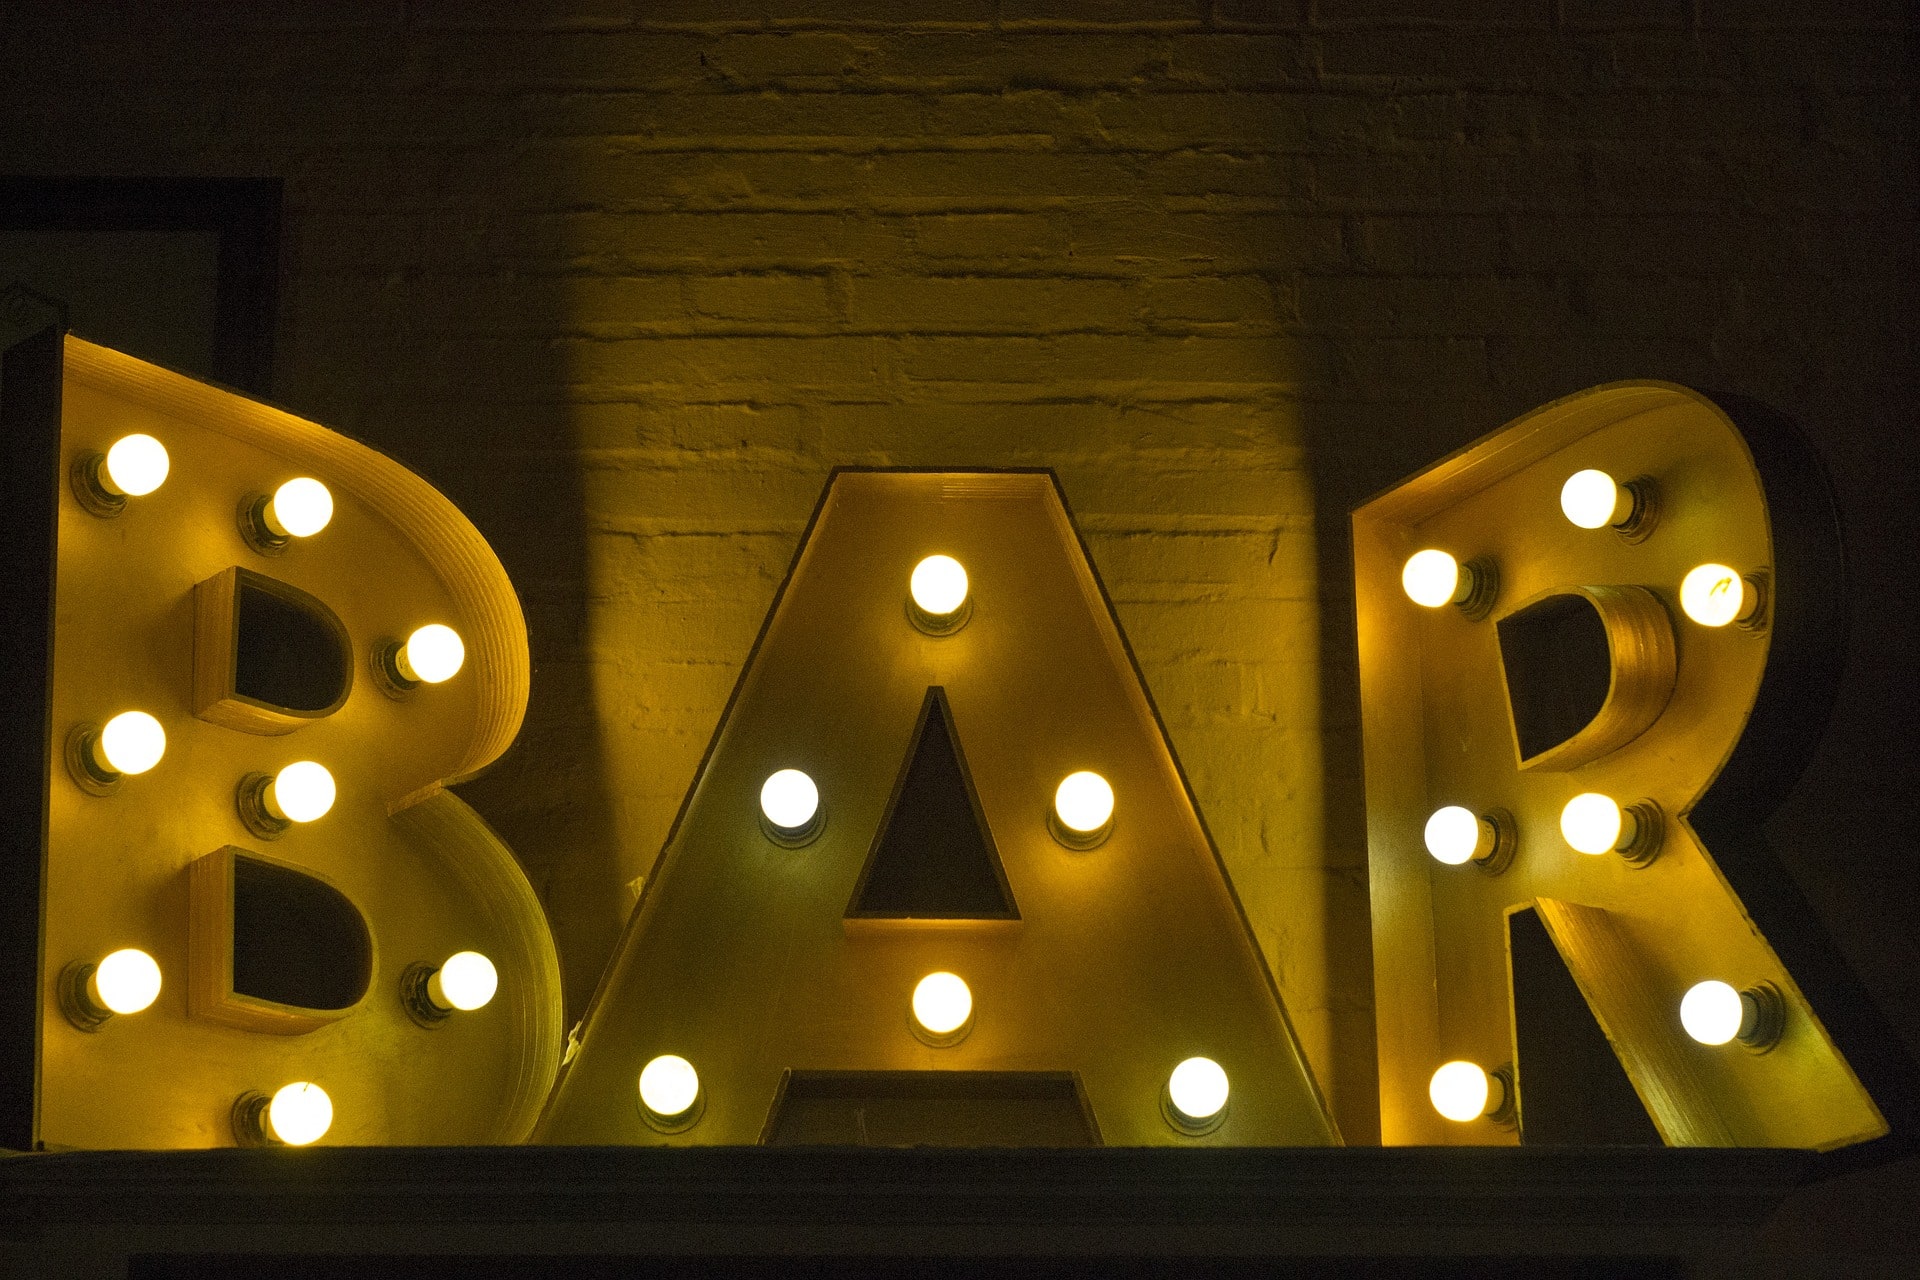 Bar with lights